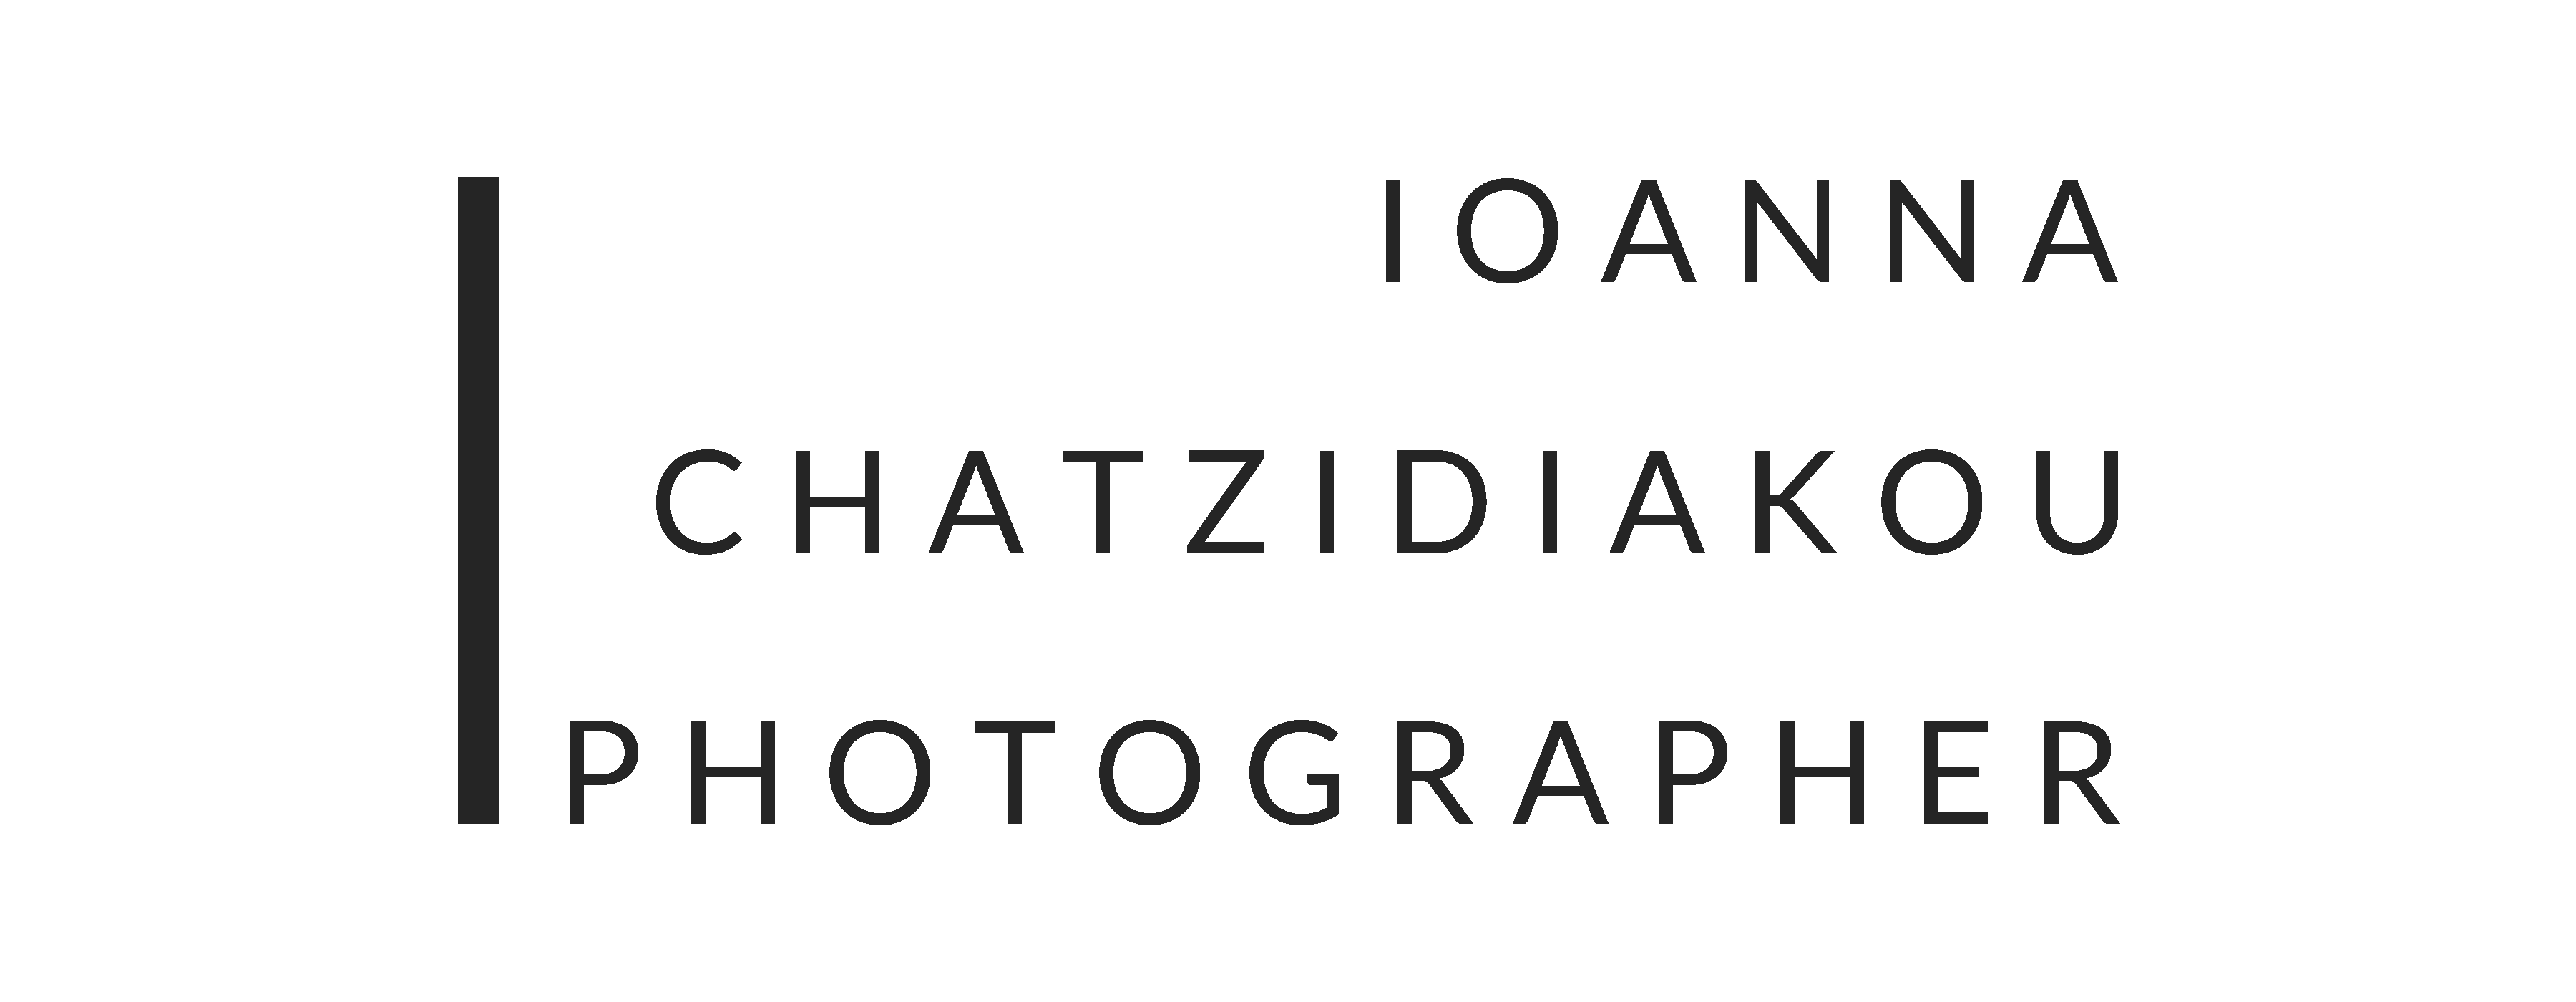 ioanna chatzidiakou photographer logo